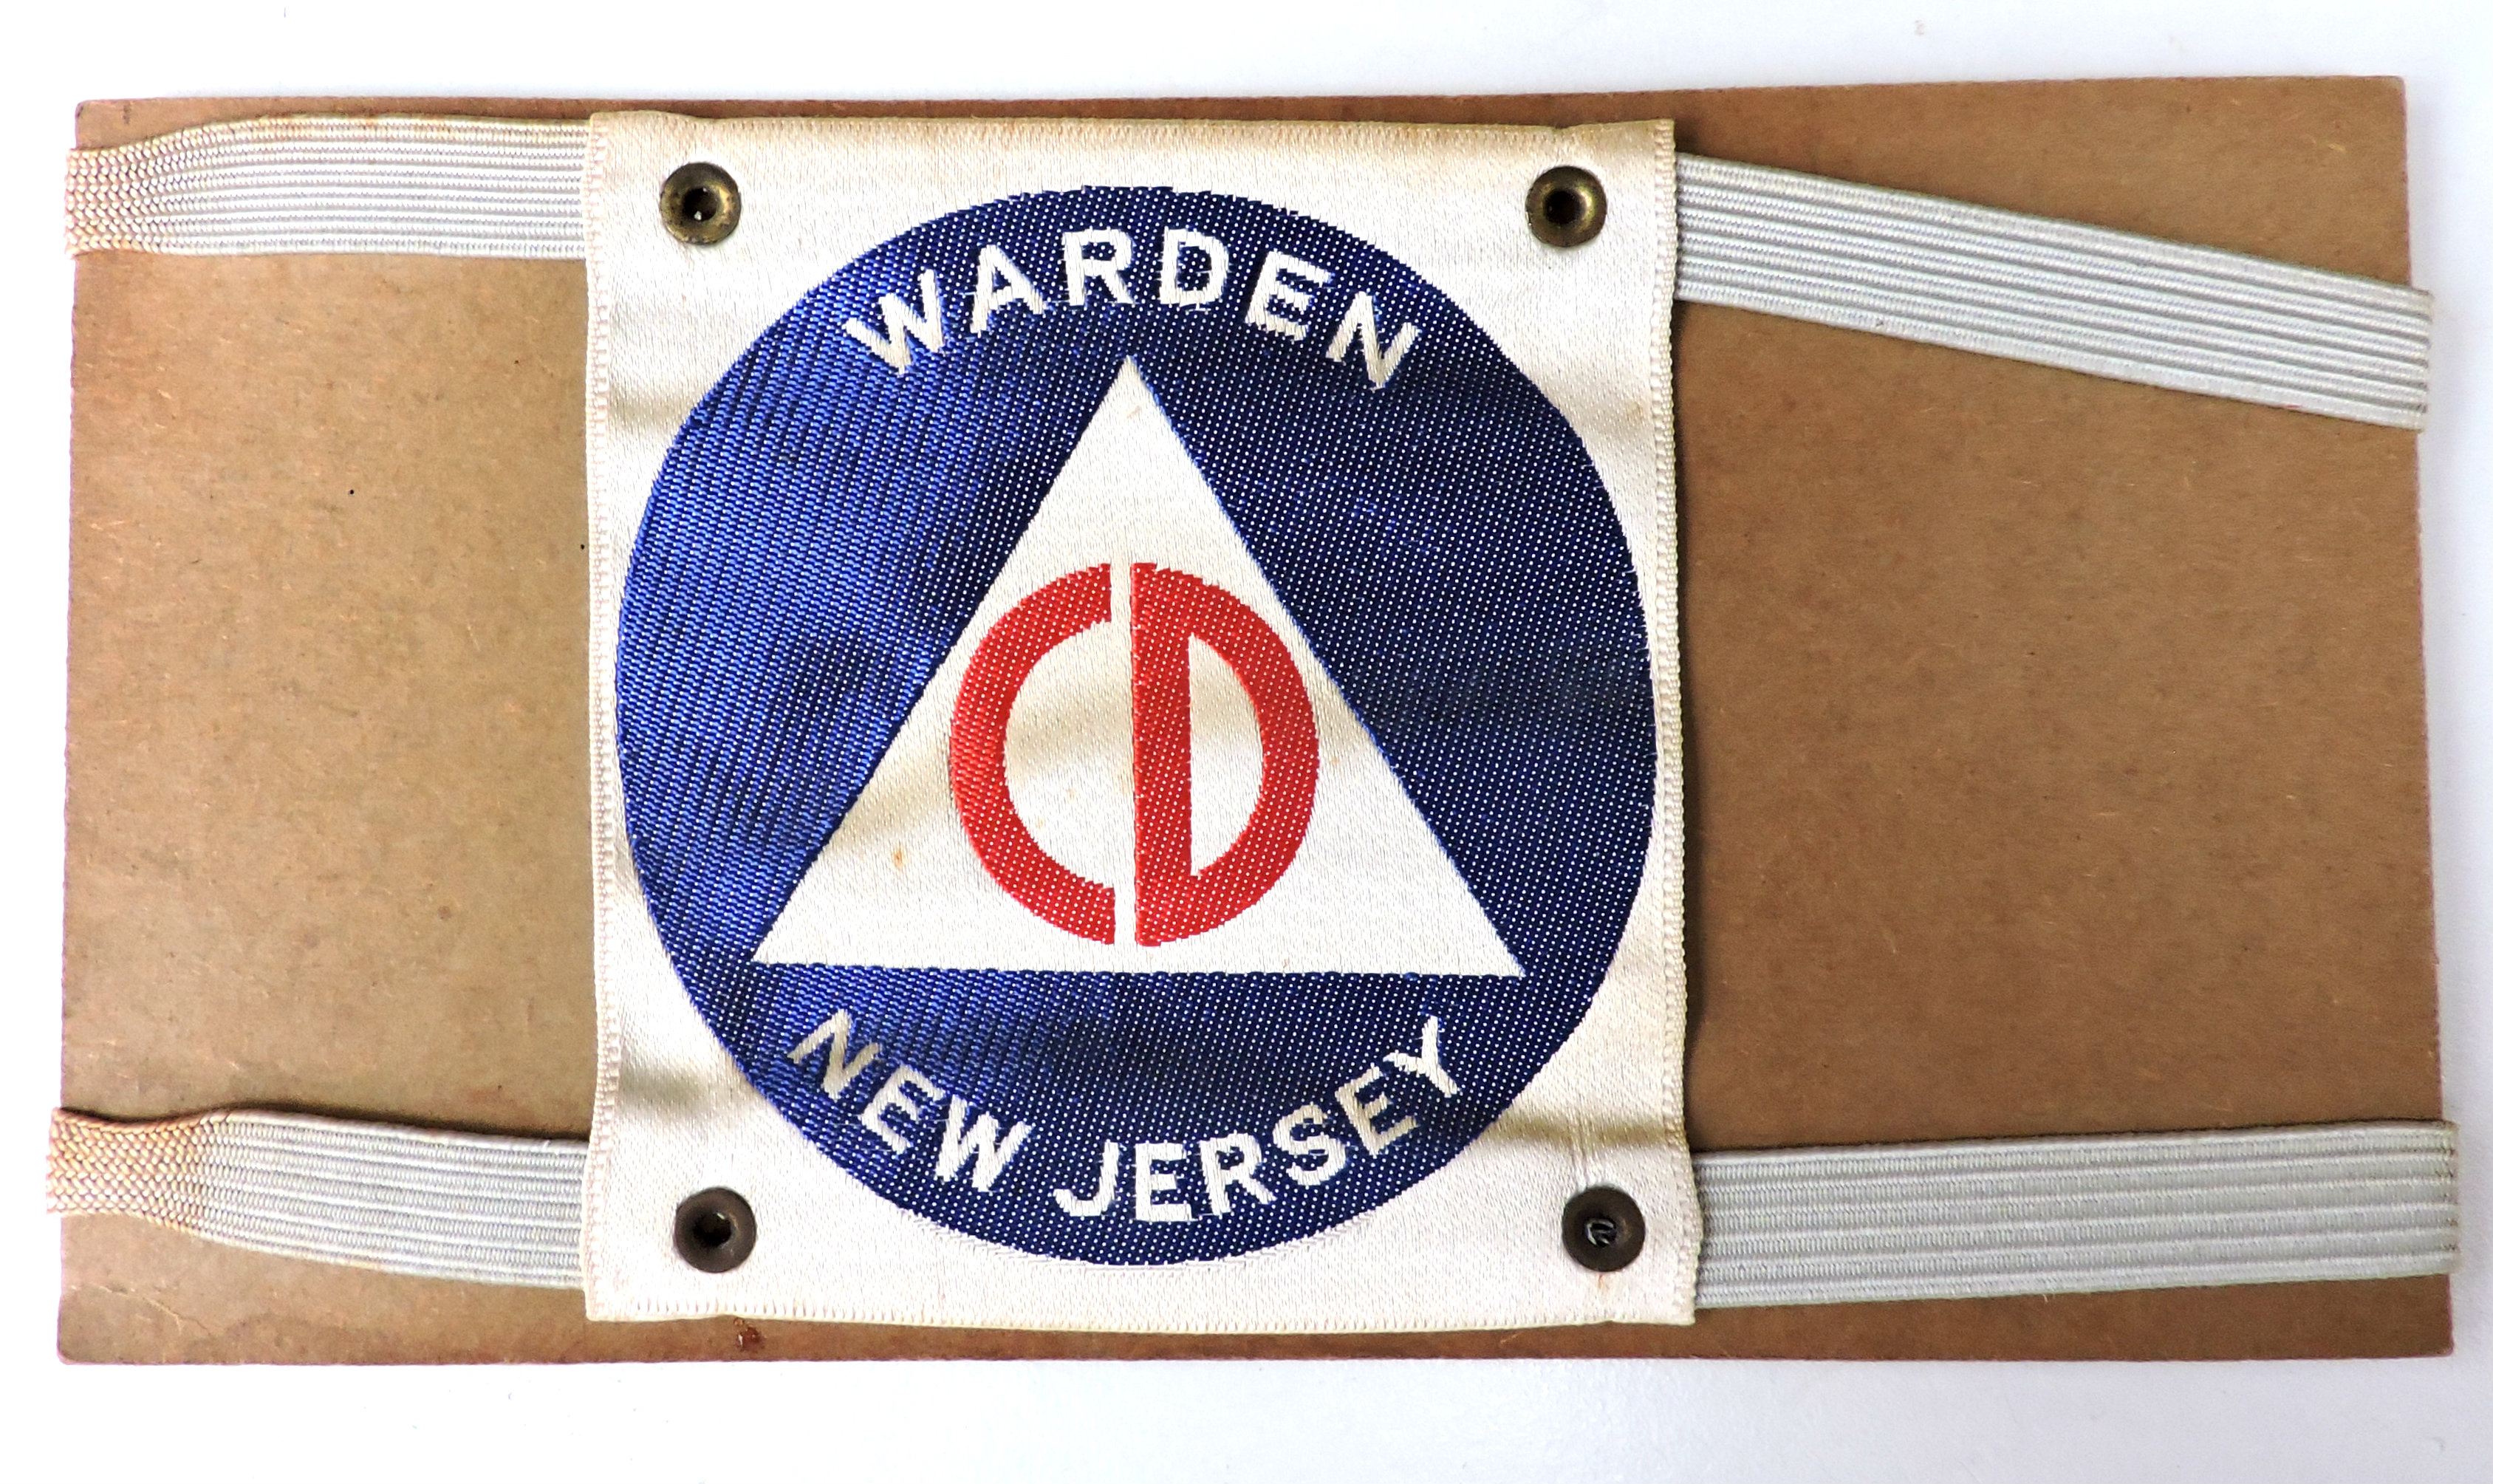 Armband Civil Defense Warden  New Jersey   WW2